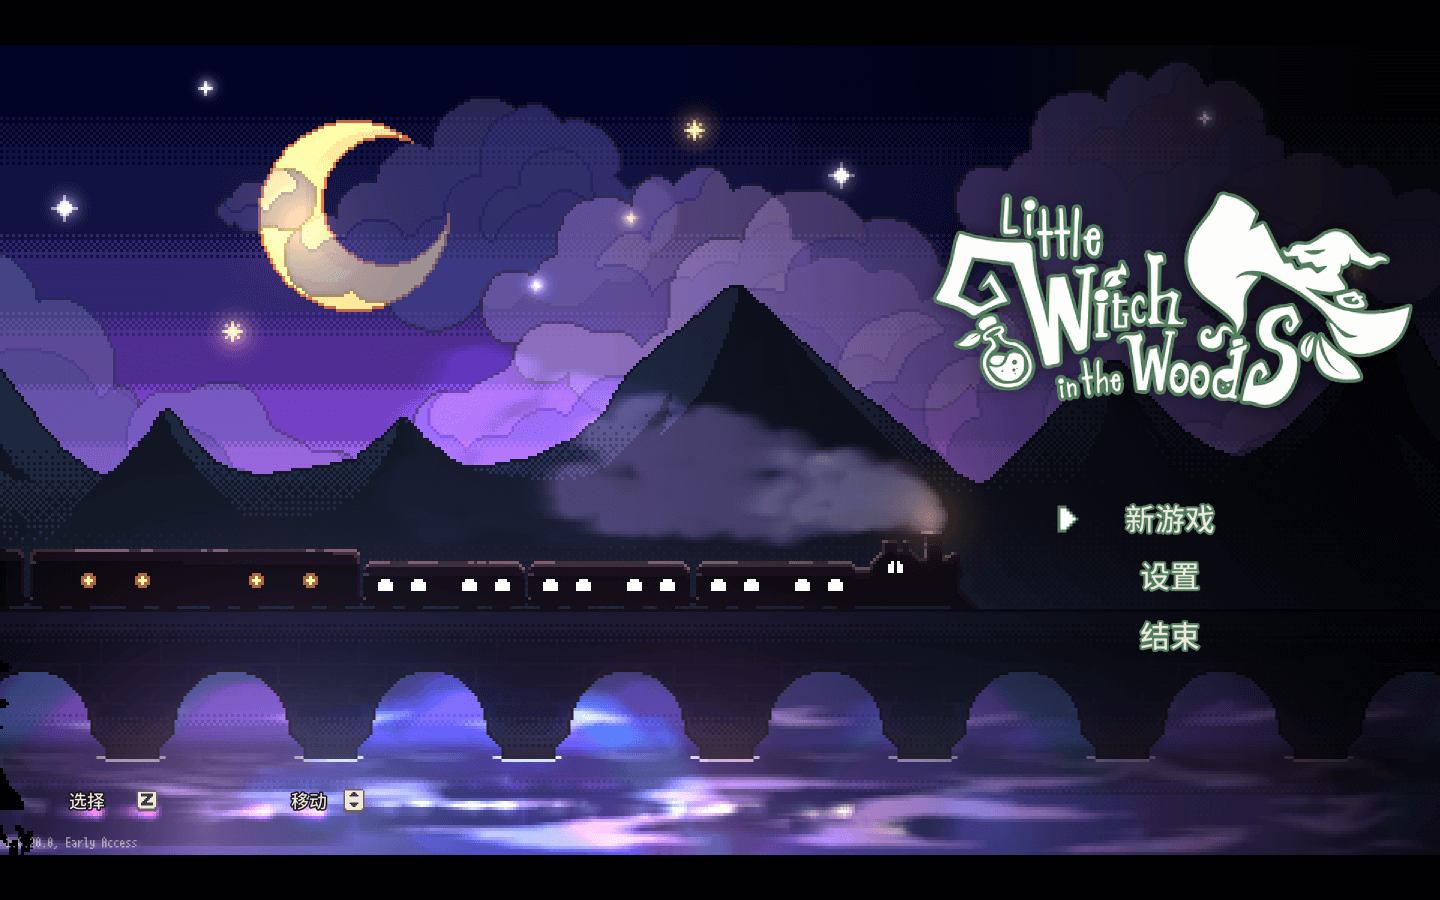 林中小女巫 Little Witch in the Woods for Mac v4.1.3.0 中文原生版-2